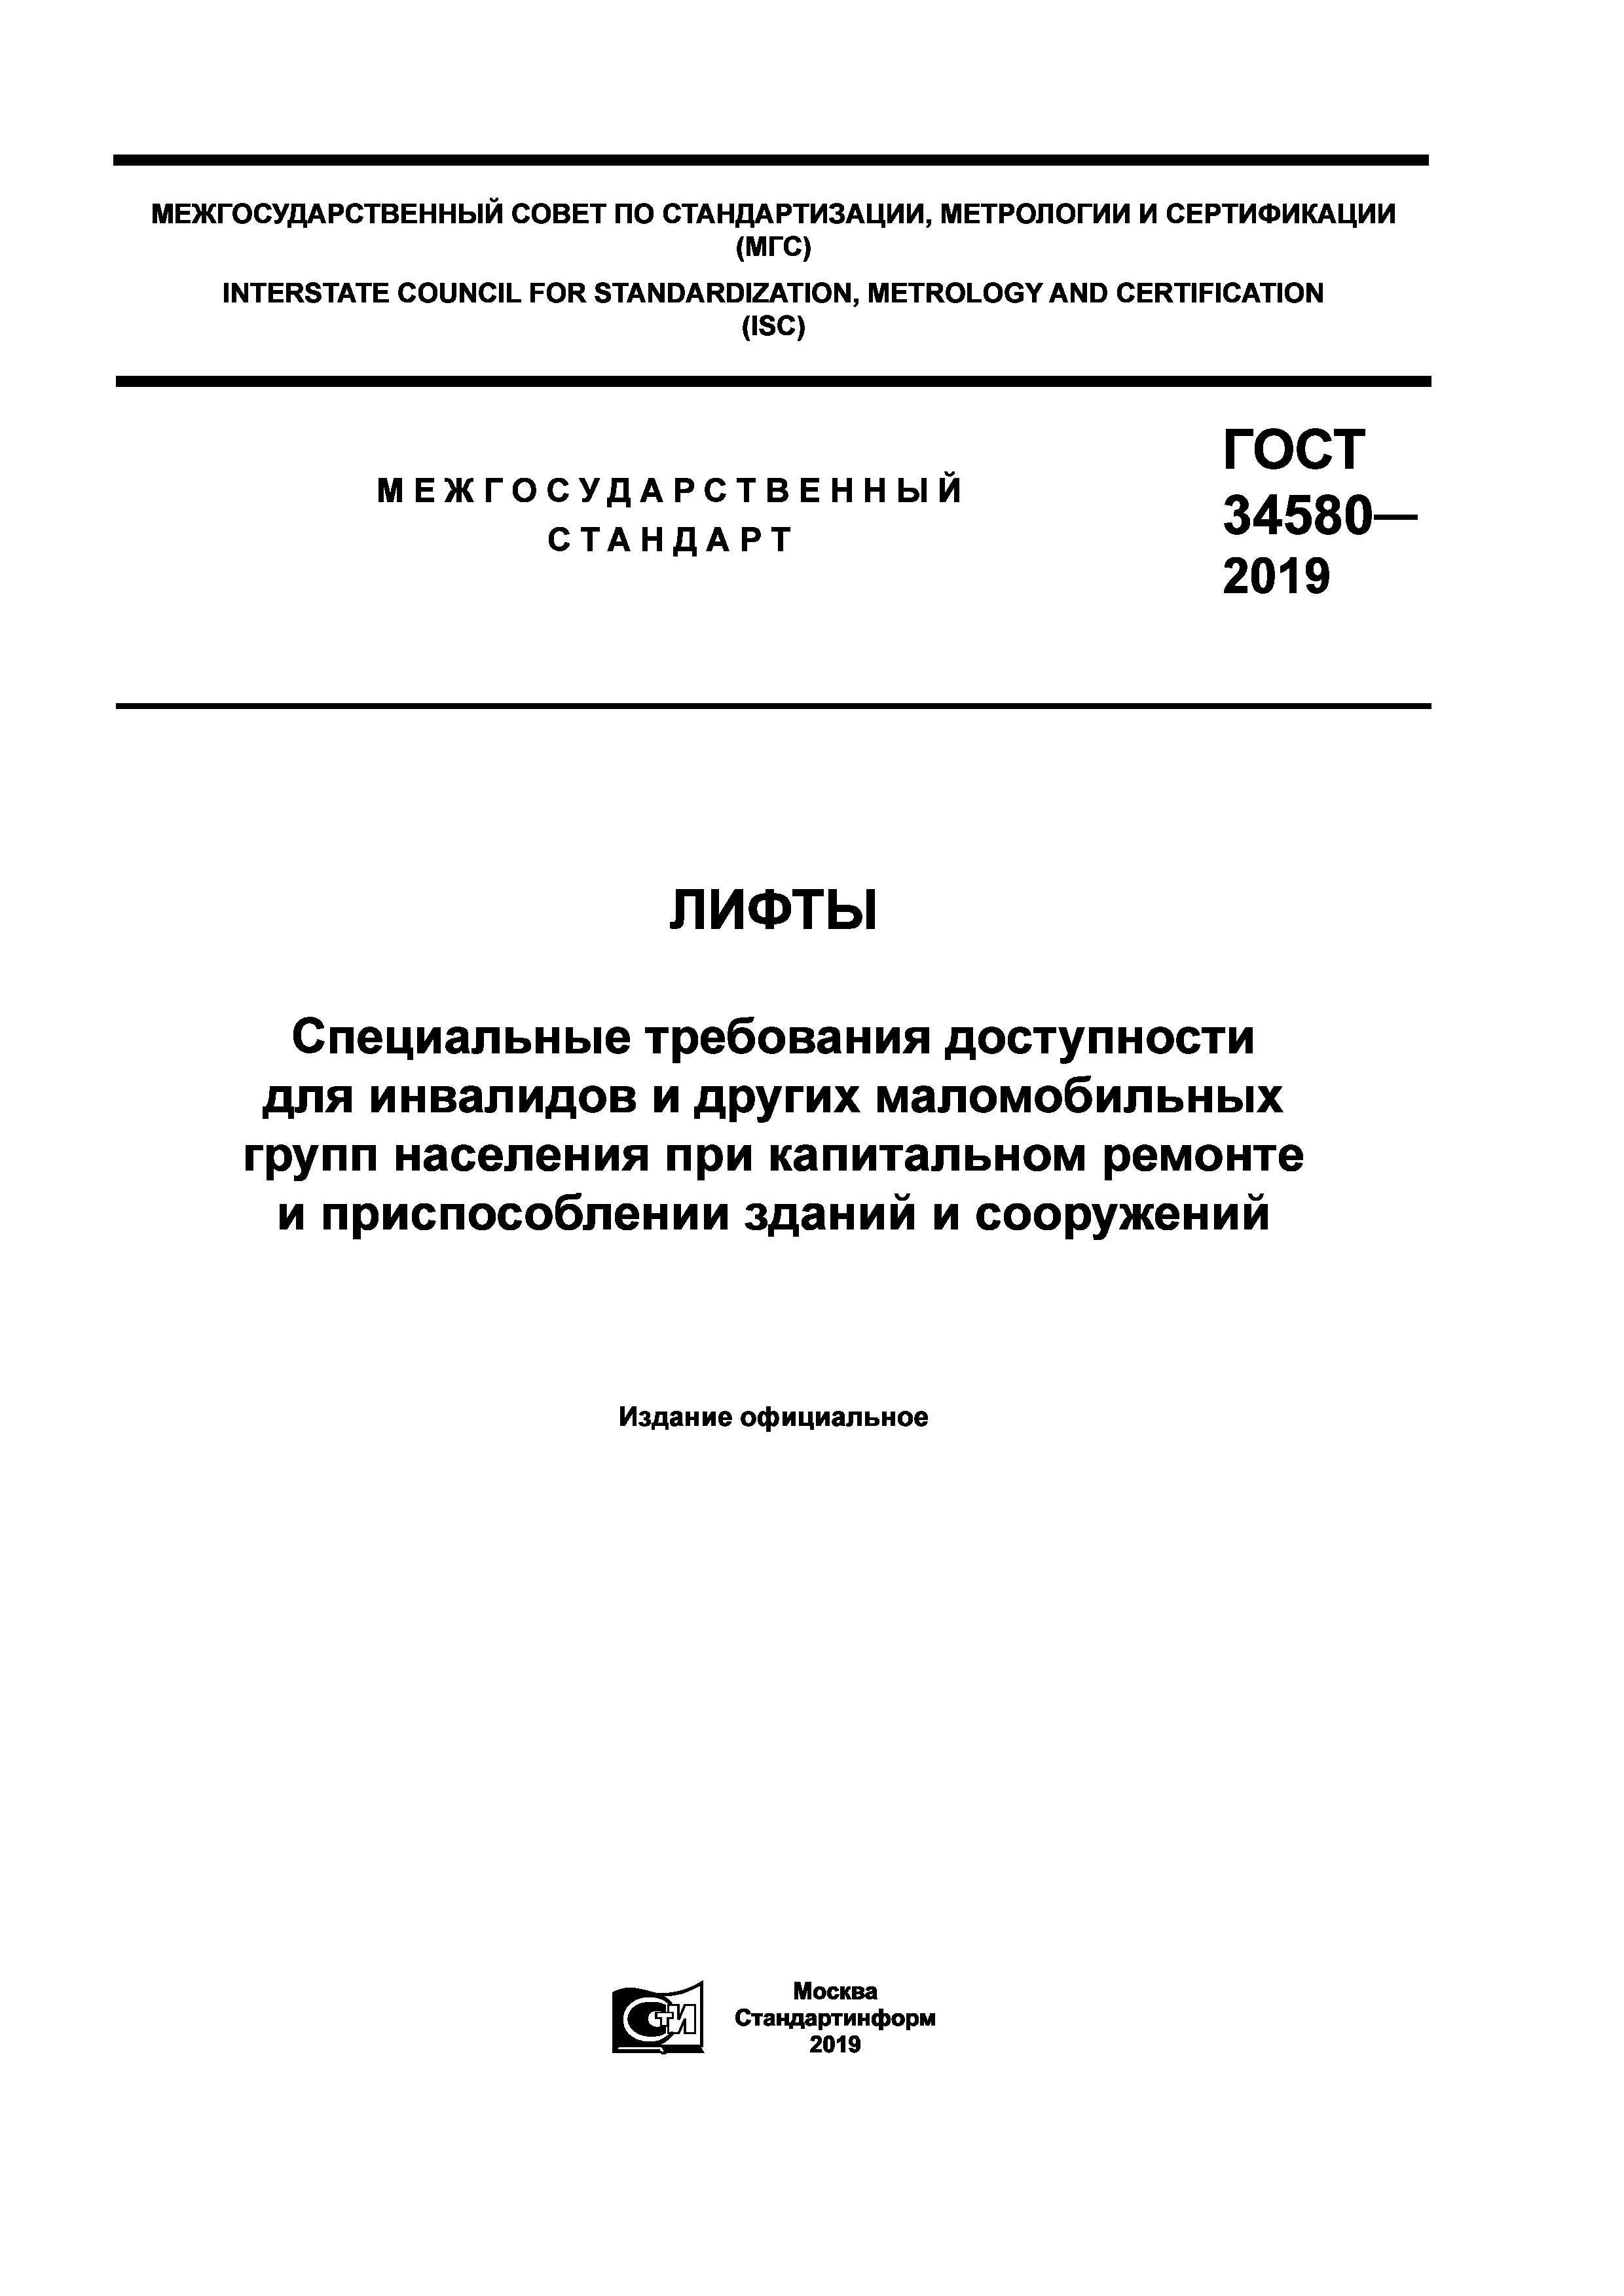 ГОСТ 34580-2019